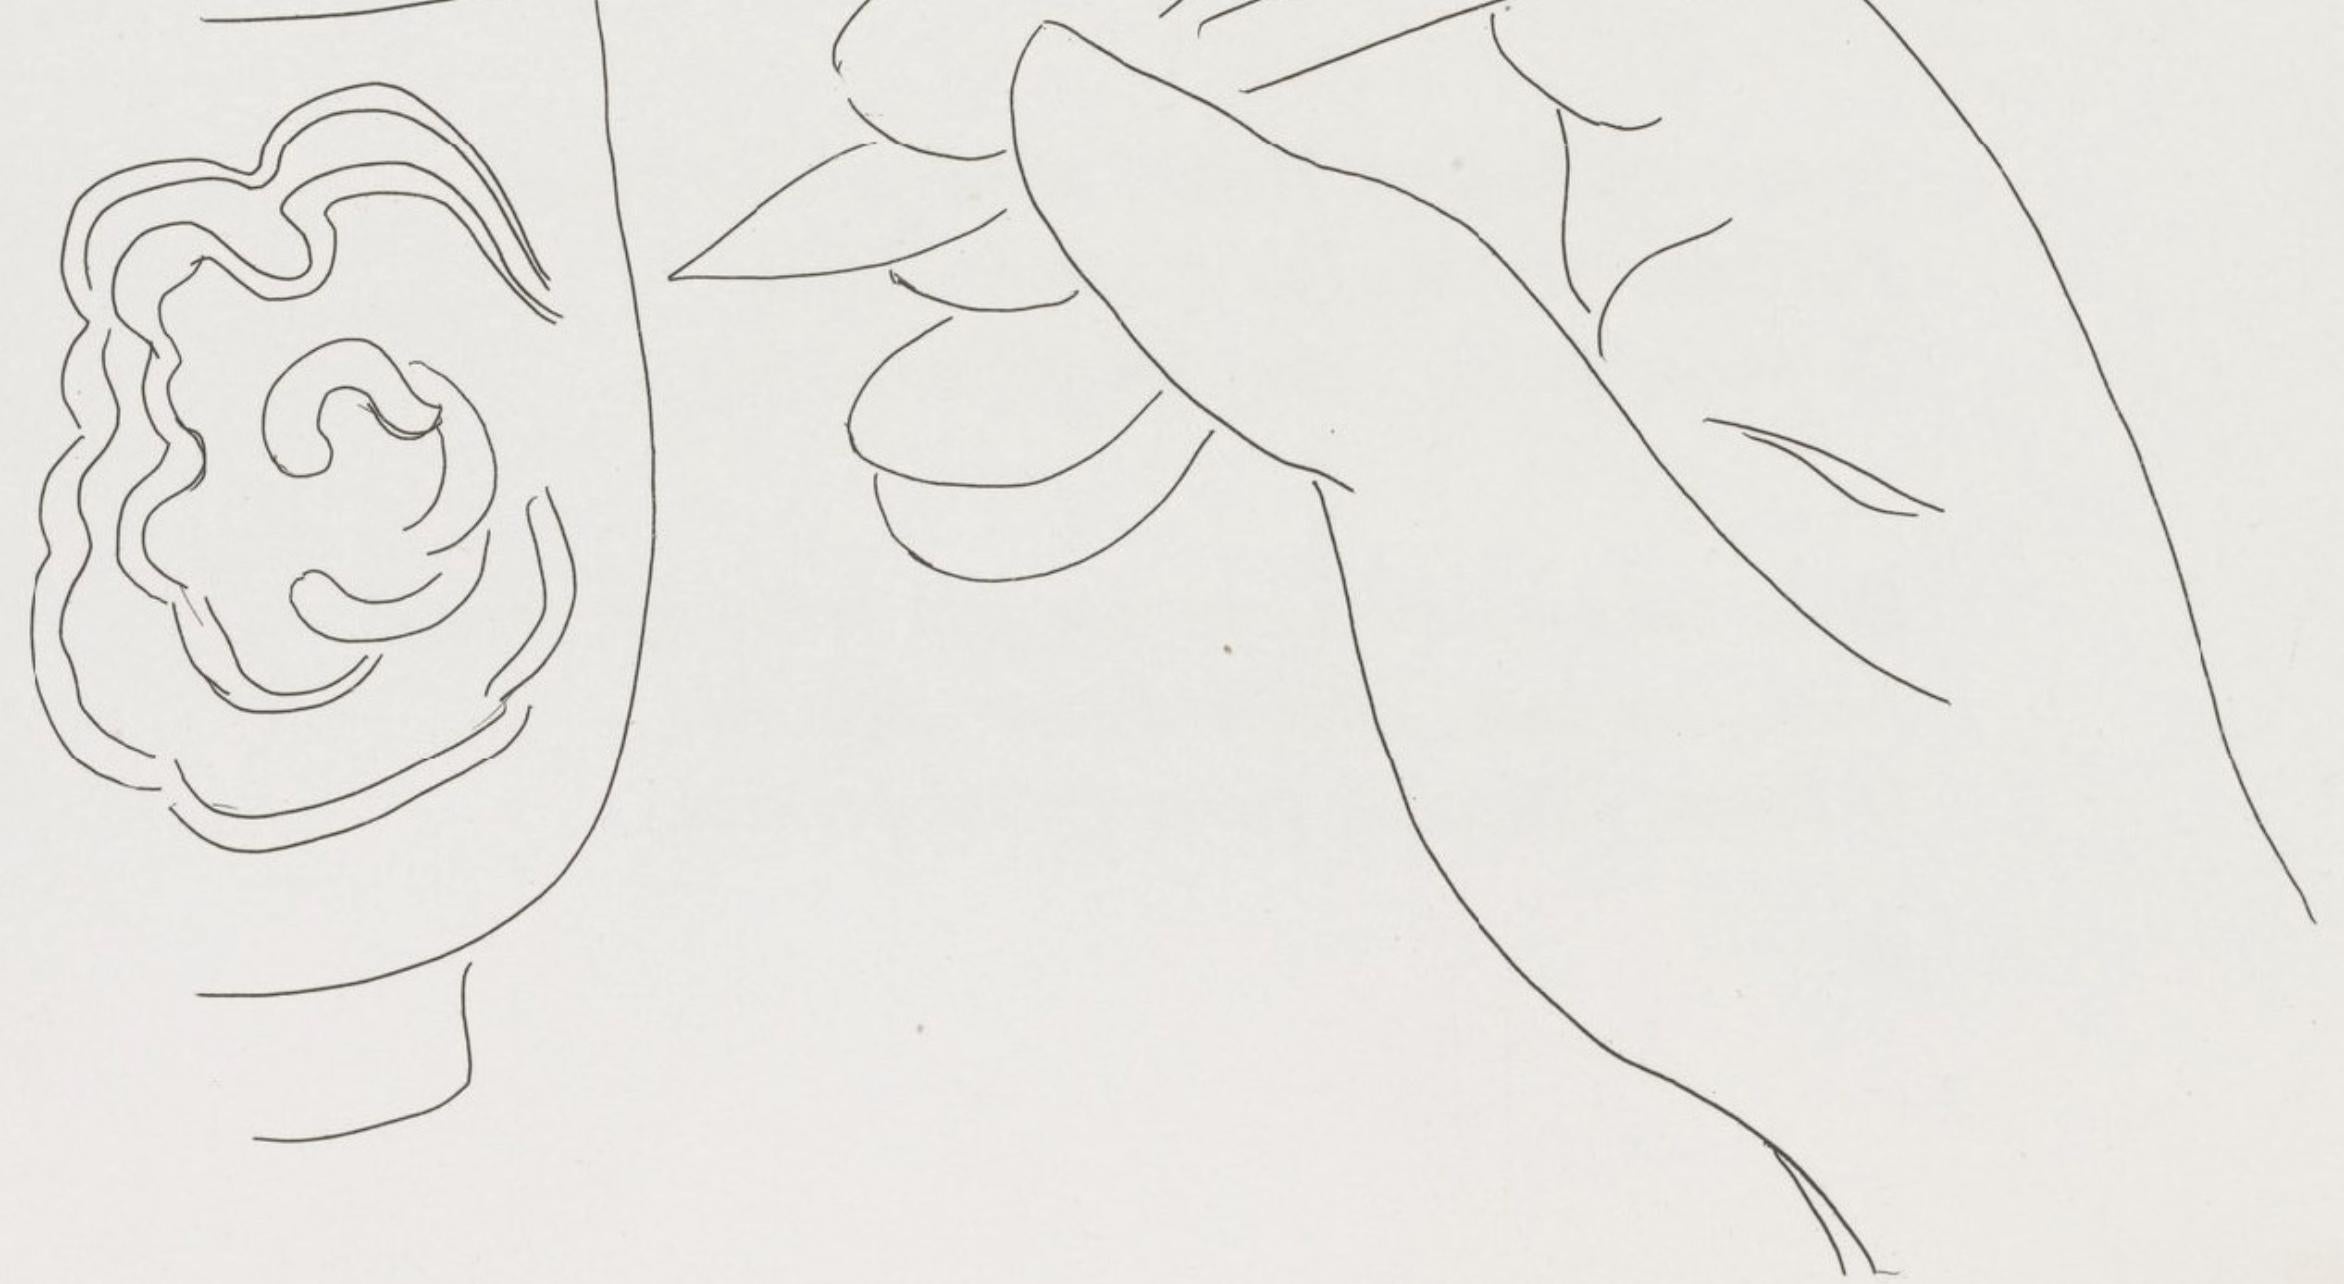 Lithograph on papier bouffant des Papeteries de Casteljoux paper. Unsigned and unnumbered, as issued. Good condition. Notes: From the folio, Poésies de Stéphane Mallarmé, Eaux-fortes originales de Henri Matisse, 1970. Published by Albert Skira,